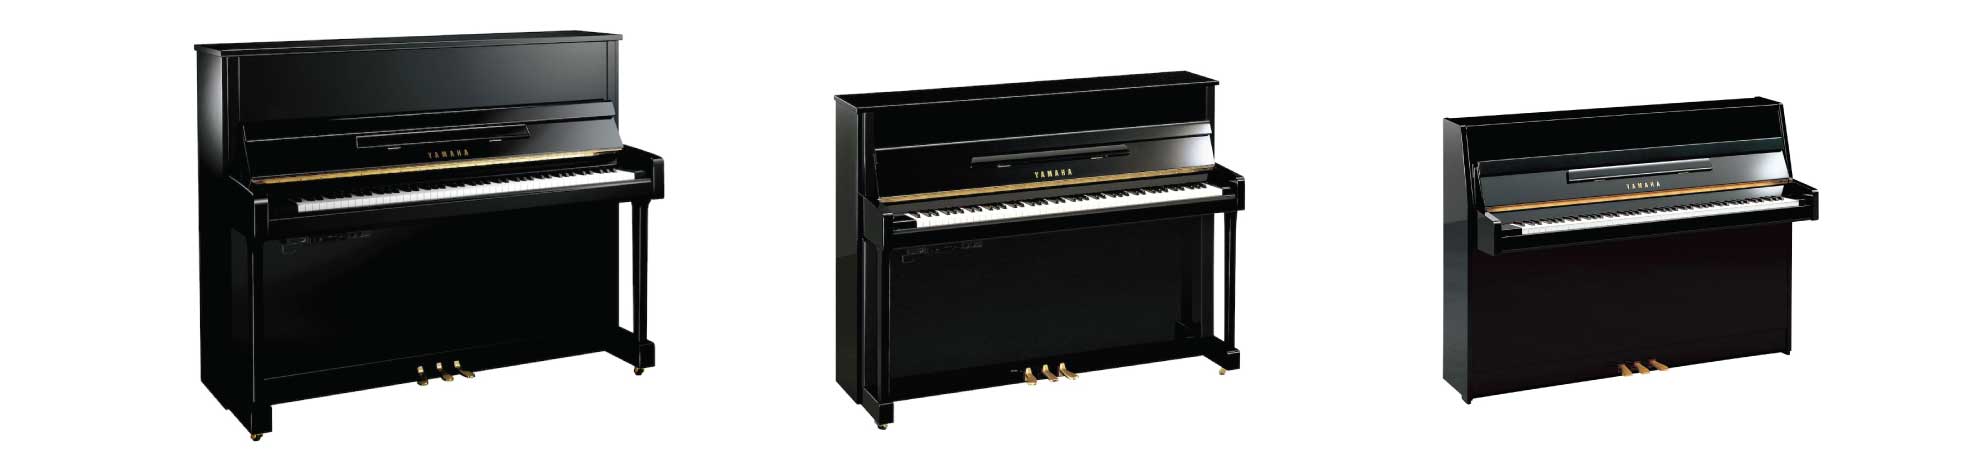 Yamaha b Series Upright Pianos